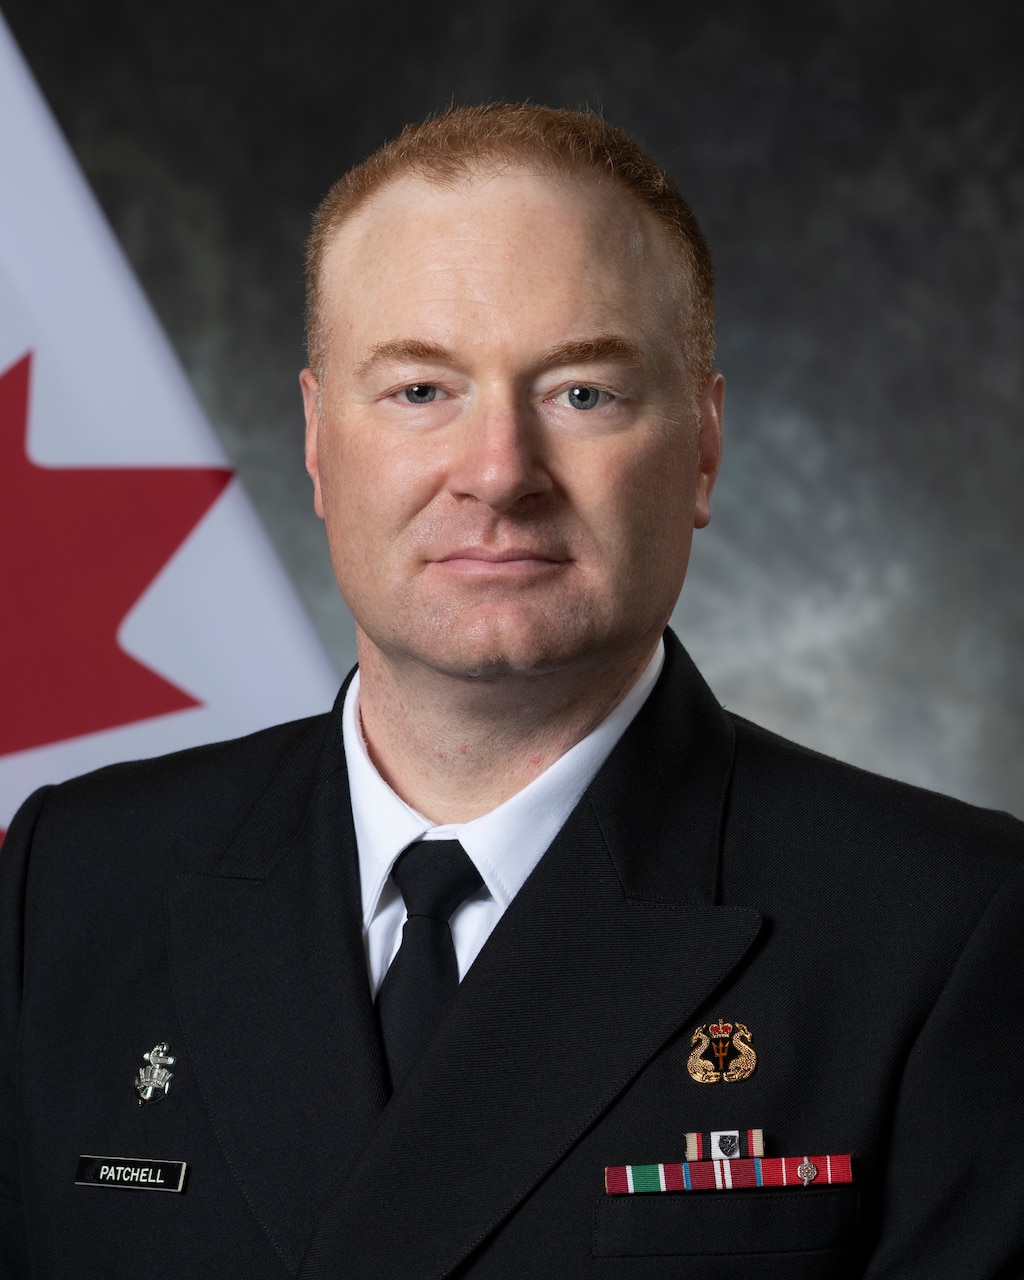 Official studio portrait of Royal Canadian Navy Rear Adm. David Patchell, Vice Commander, U.S. 2nd Fleet